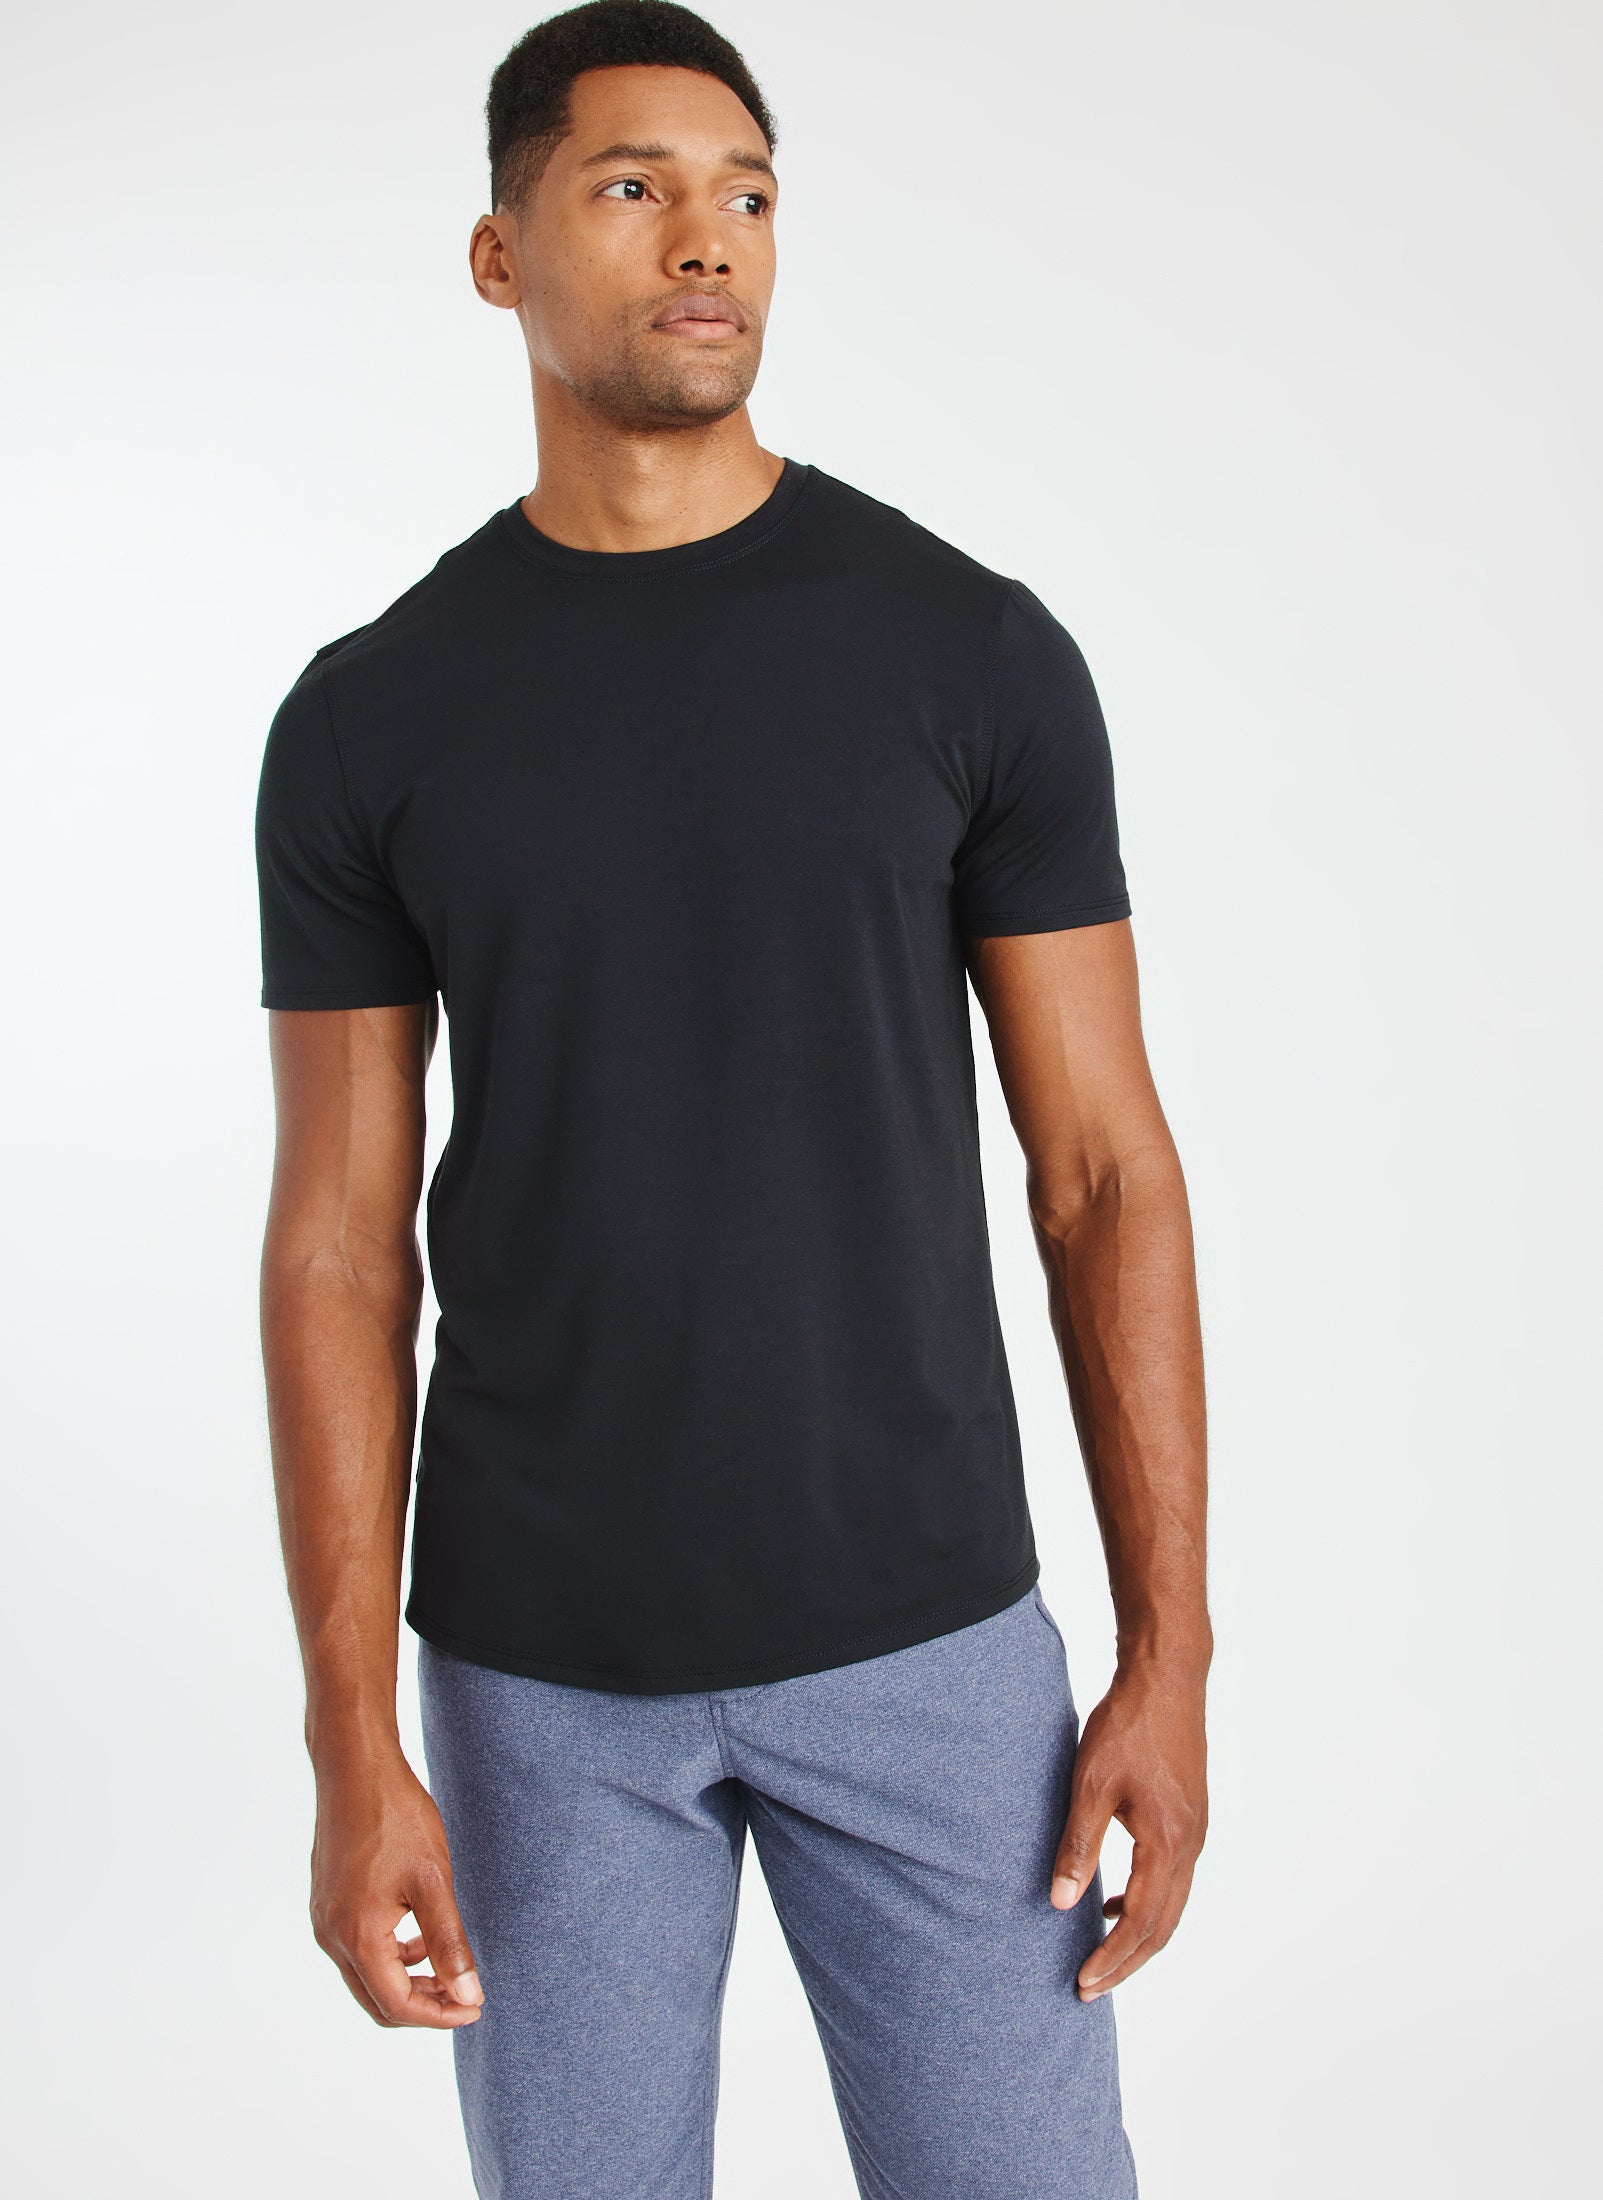 planet fitness Tees - Short Sleeve Shirts for Men - Poshmark